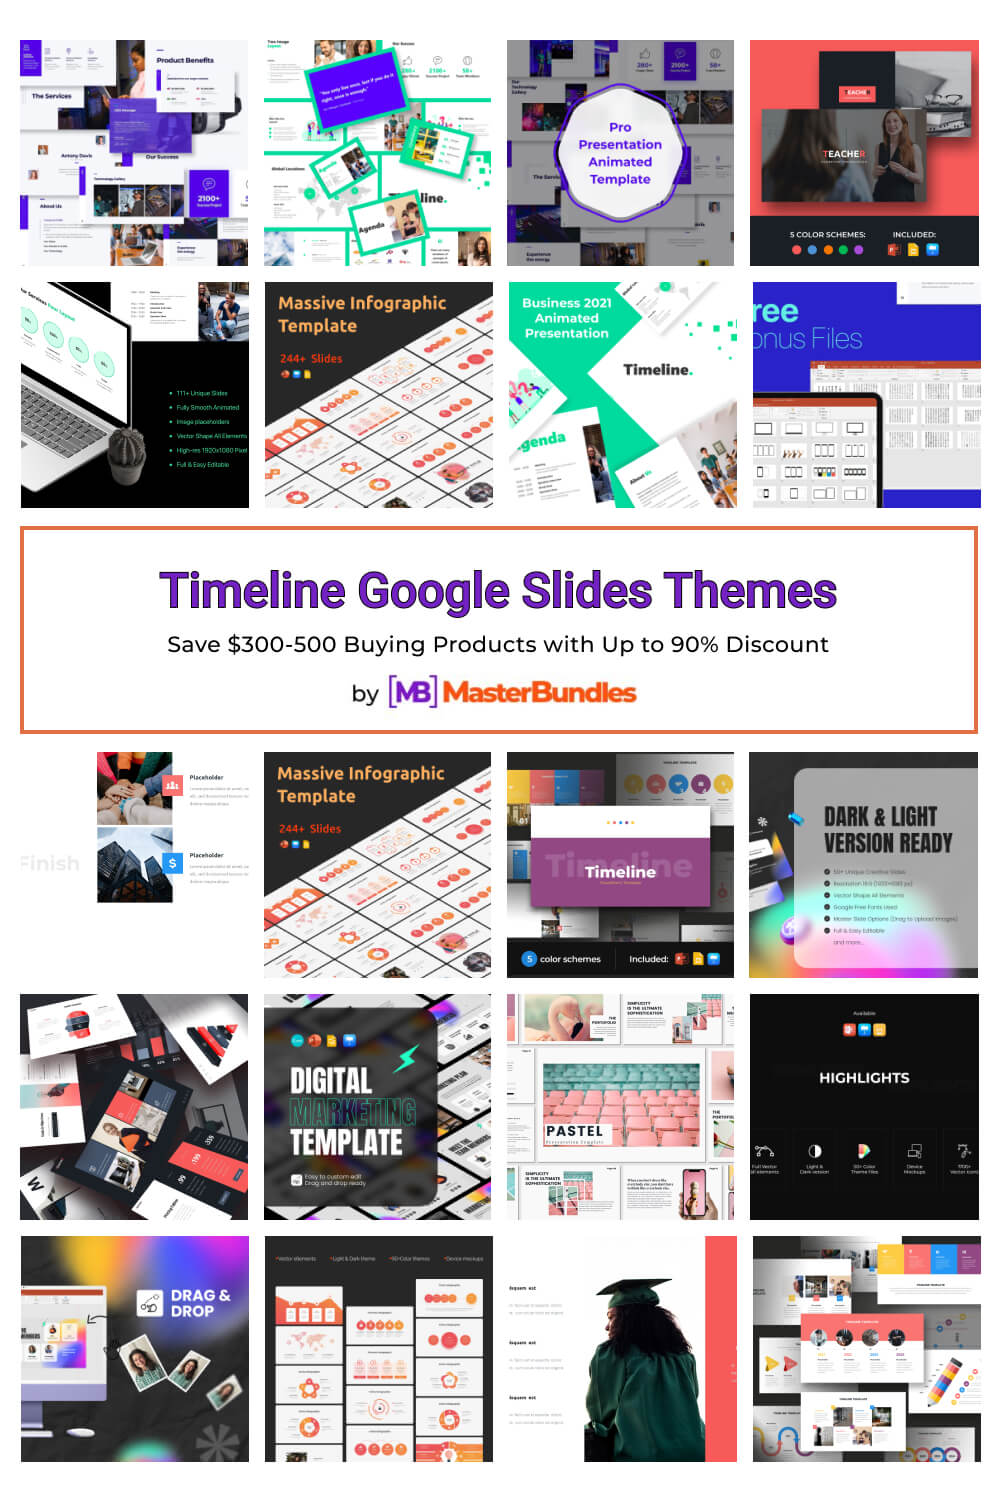 timeline google slides themes pinterest image.